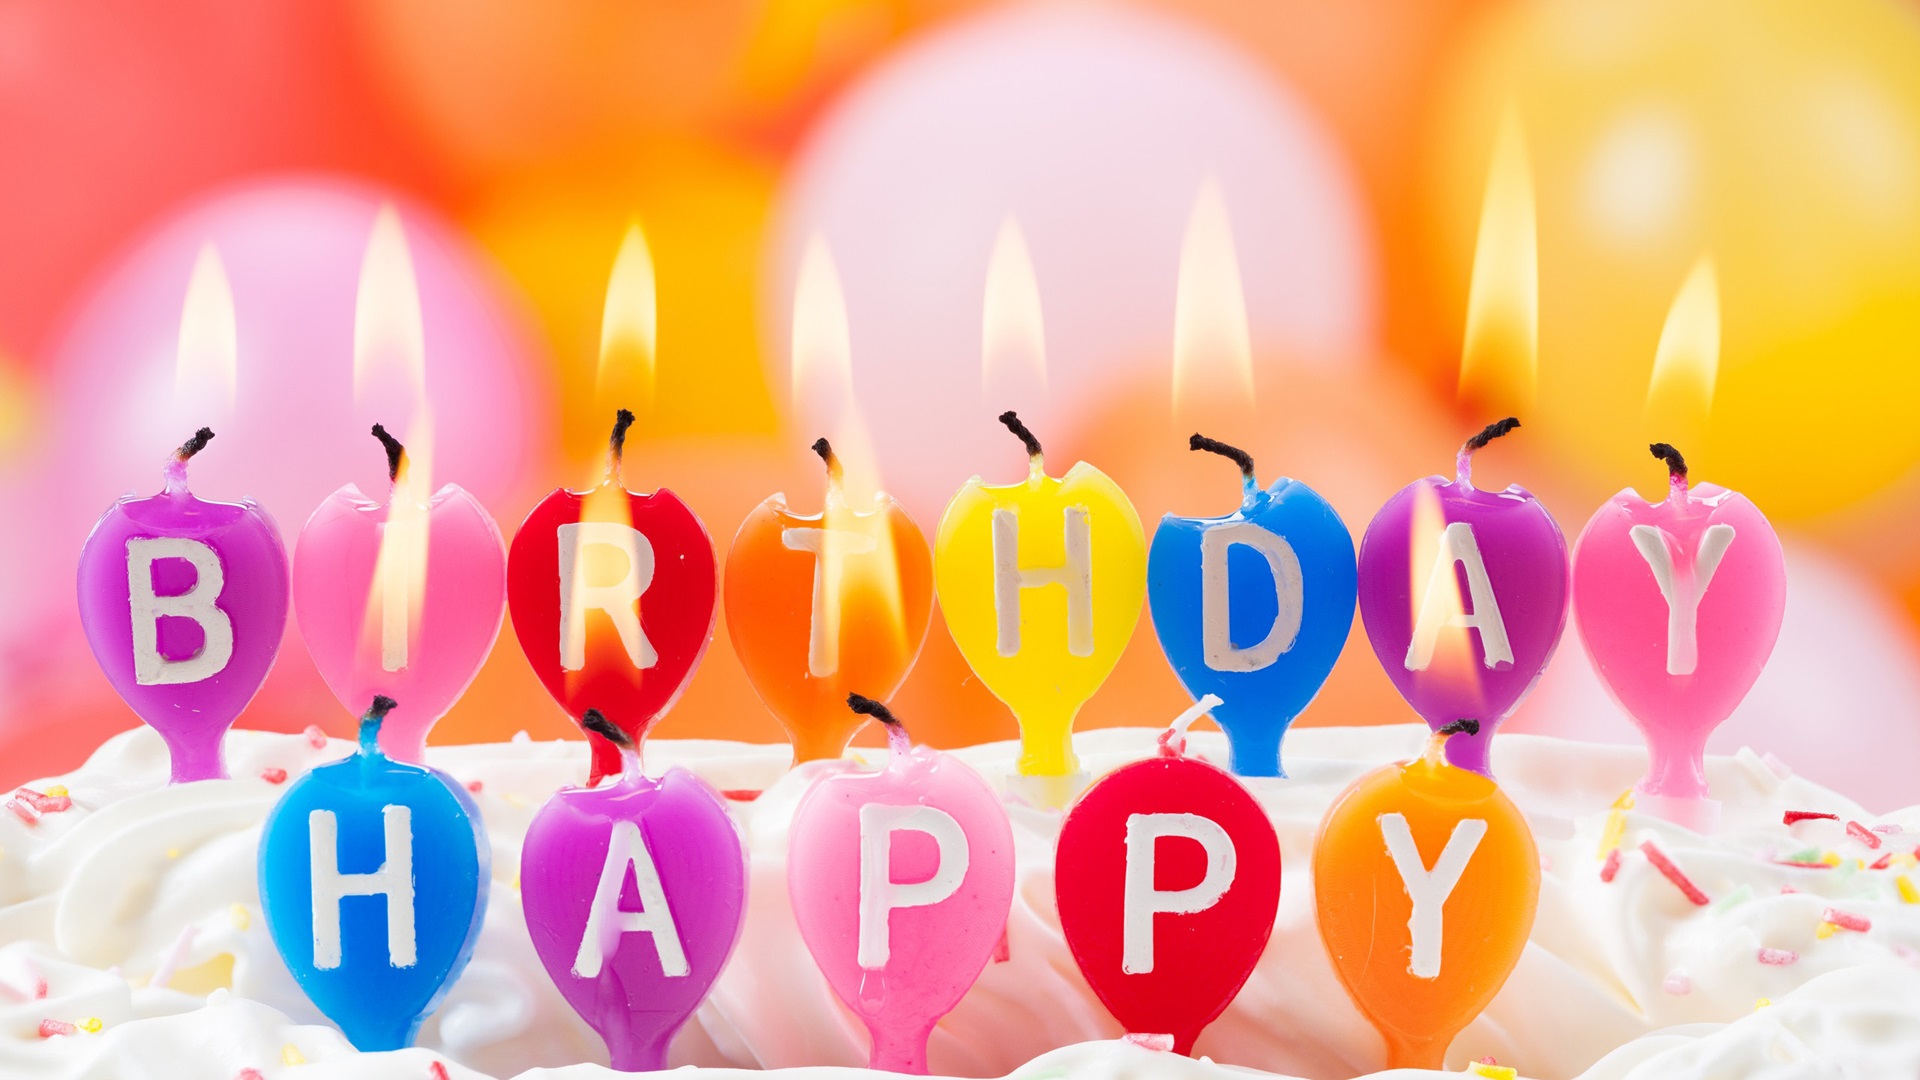 Happy-birthday-candles-candle-light_1920x1080.jpg